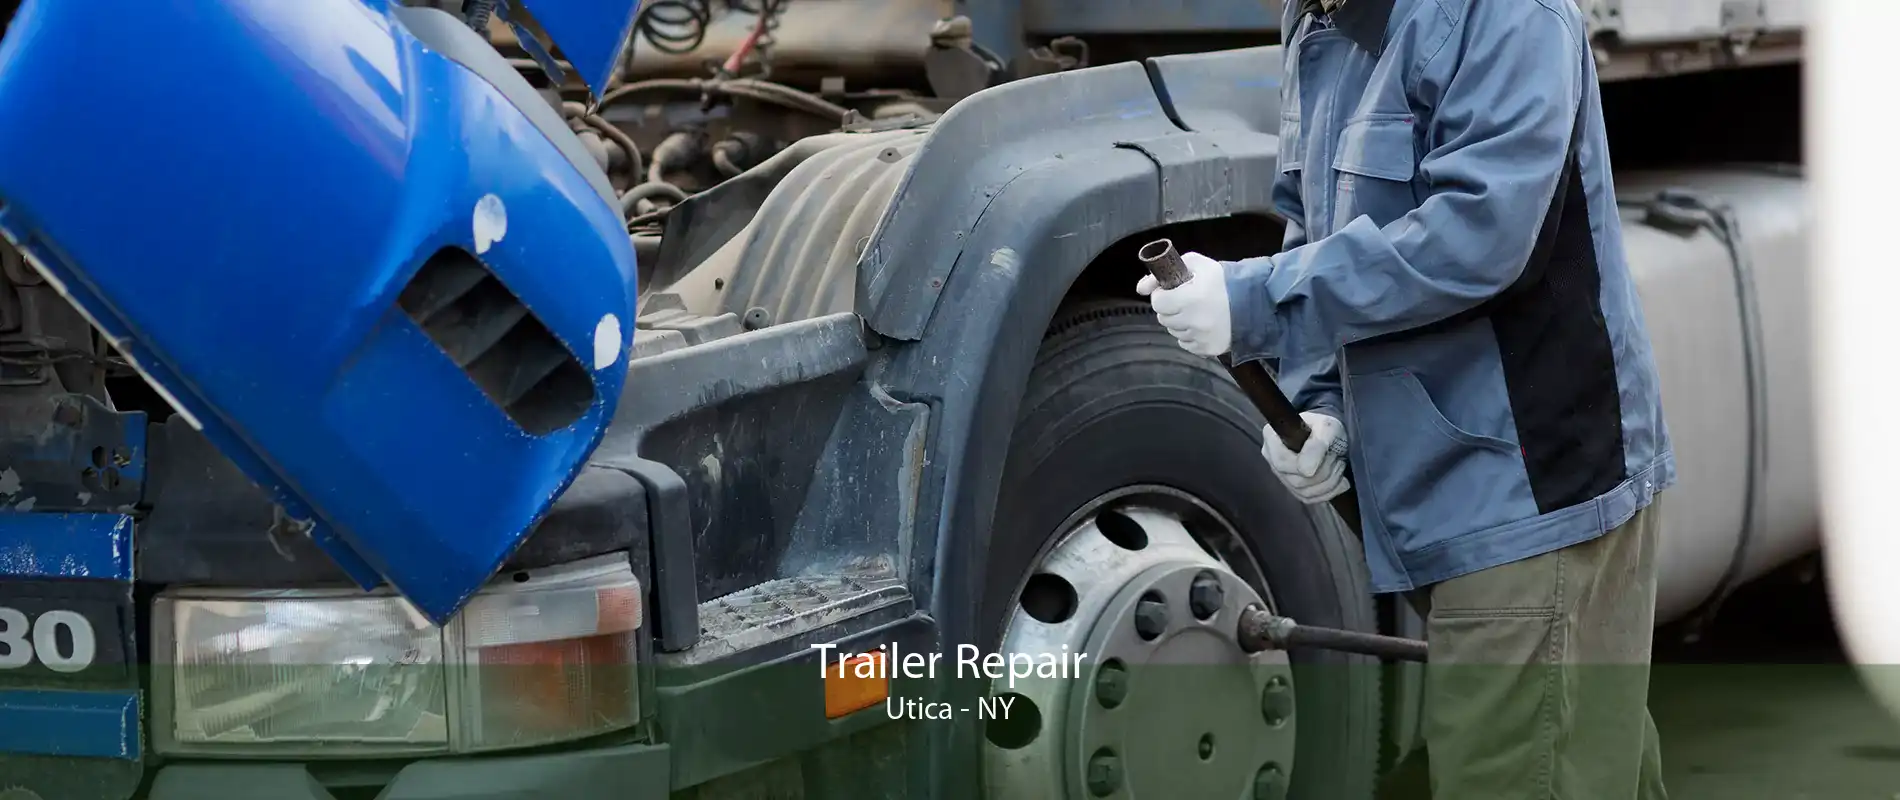 Trailer Repair Utica - NY